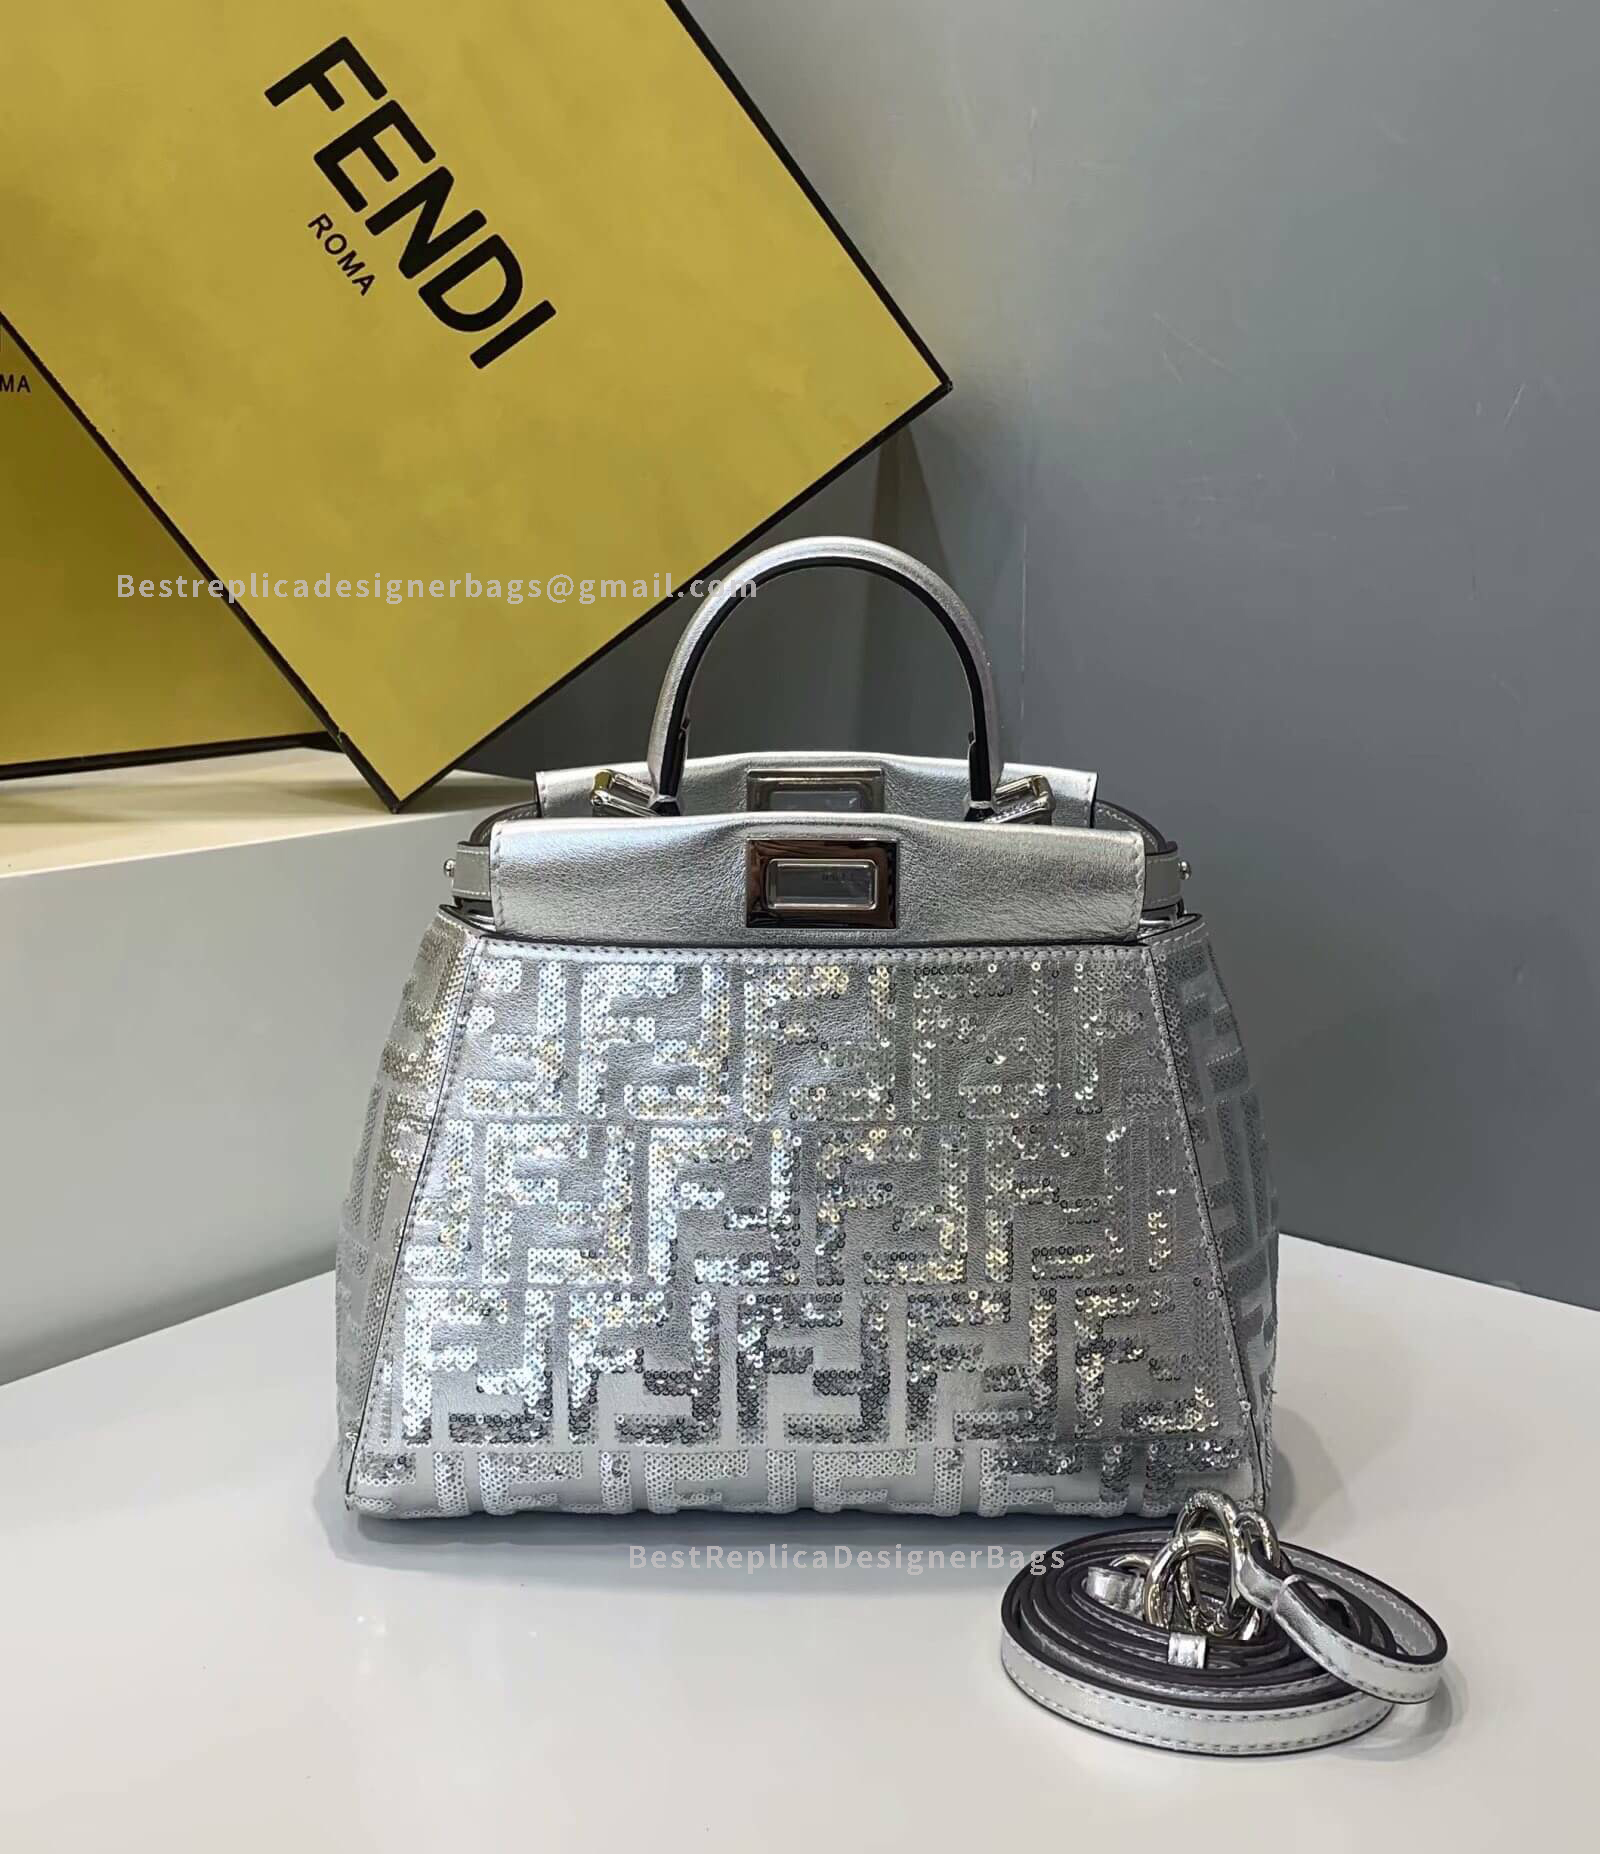 Fendi Peekaboo Iconic mini Silver Leather Bag 2120 - Best Fendi Replica